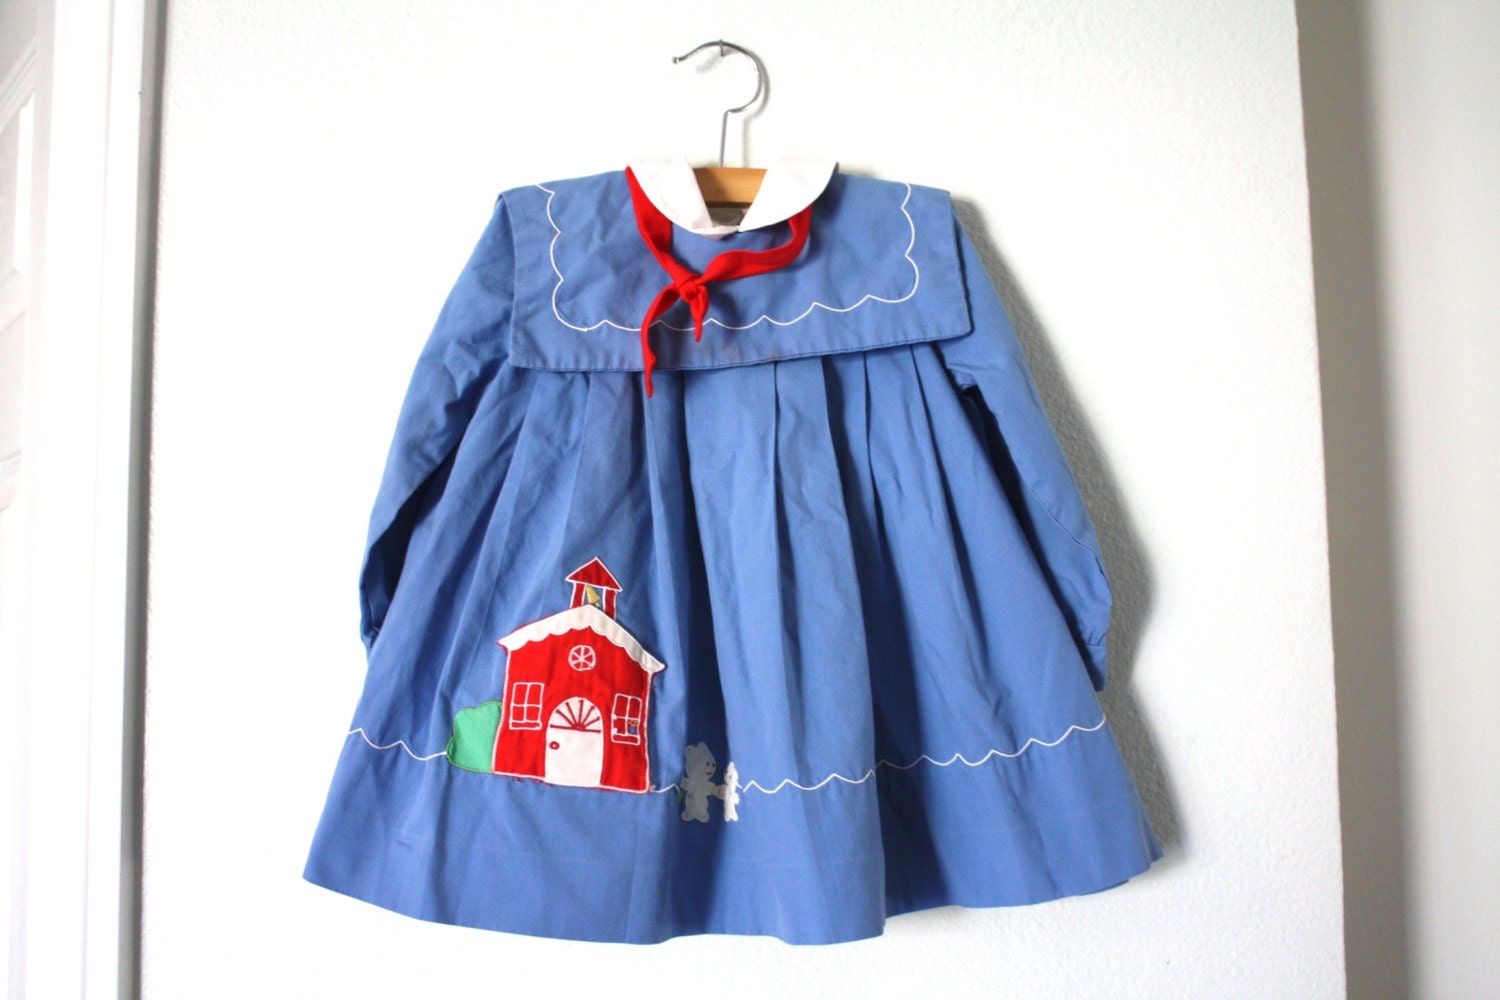 Vintage School house Dress, Baby Toddler Girl Size 2T - 1SweetDreamVintage